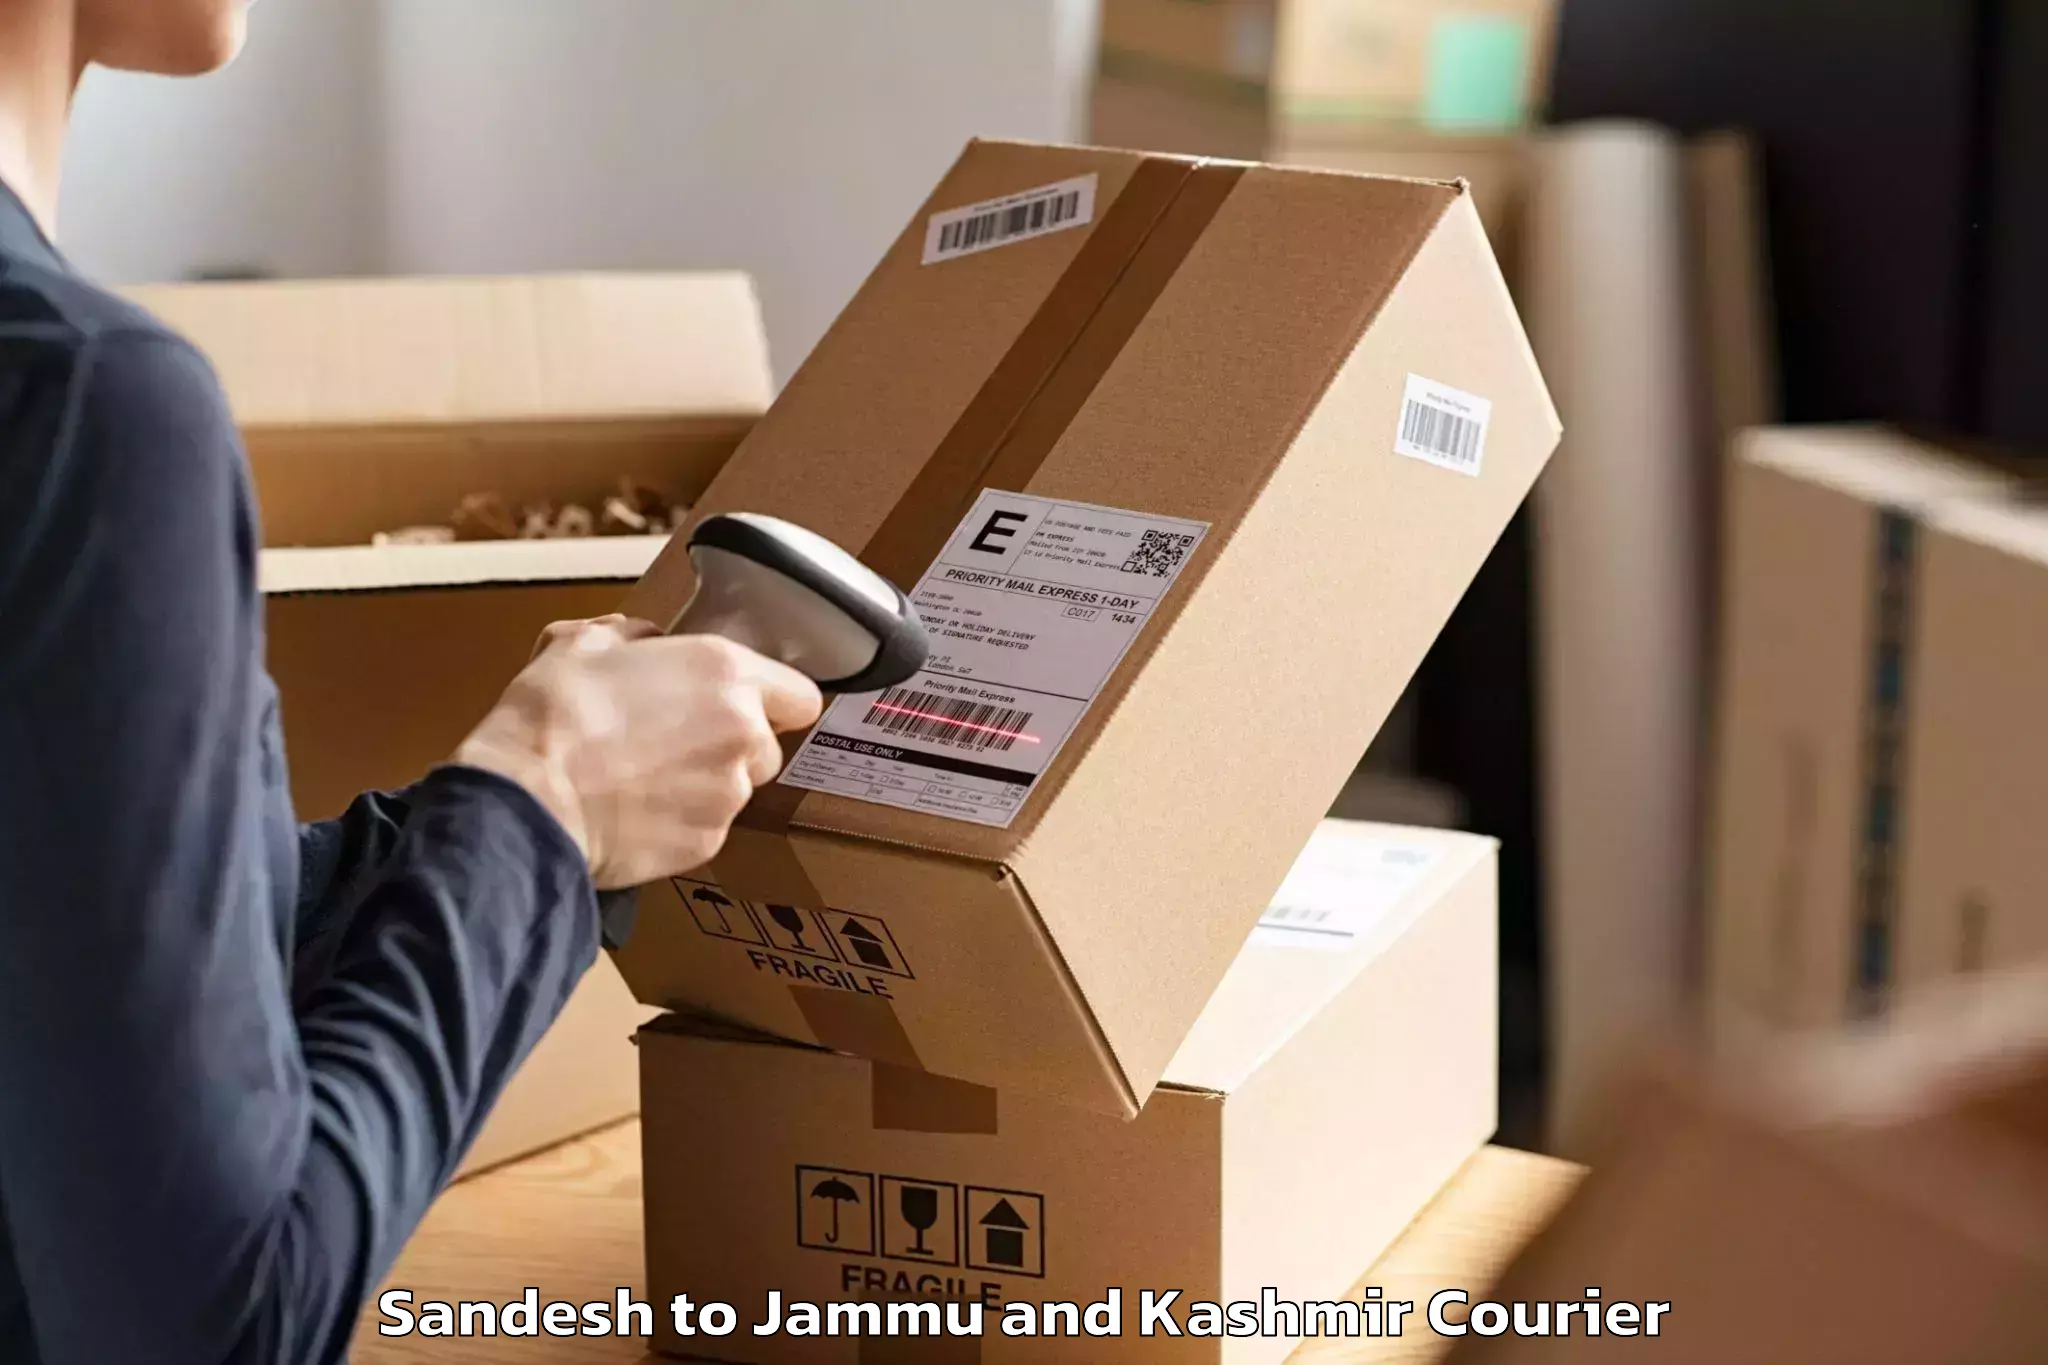 Budget-friendly movers Sandesh to Kargil